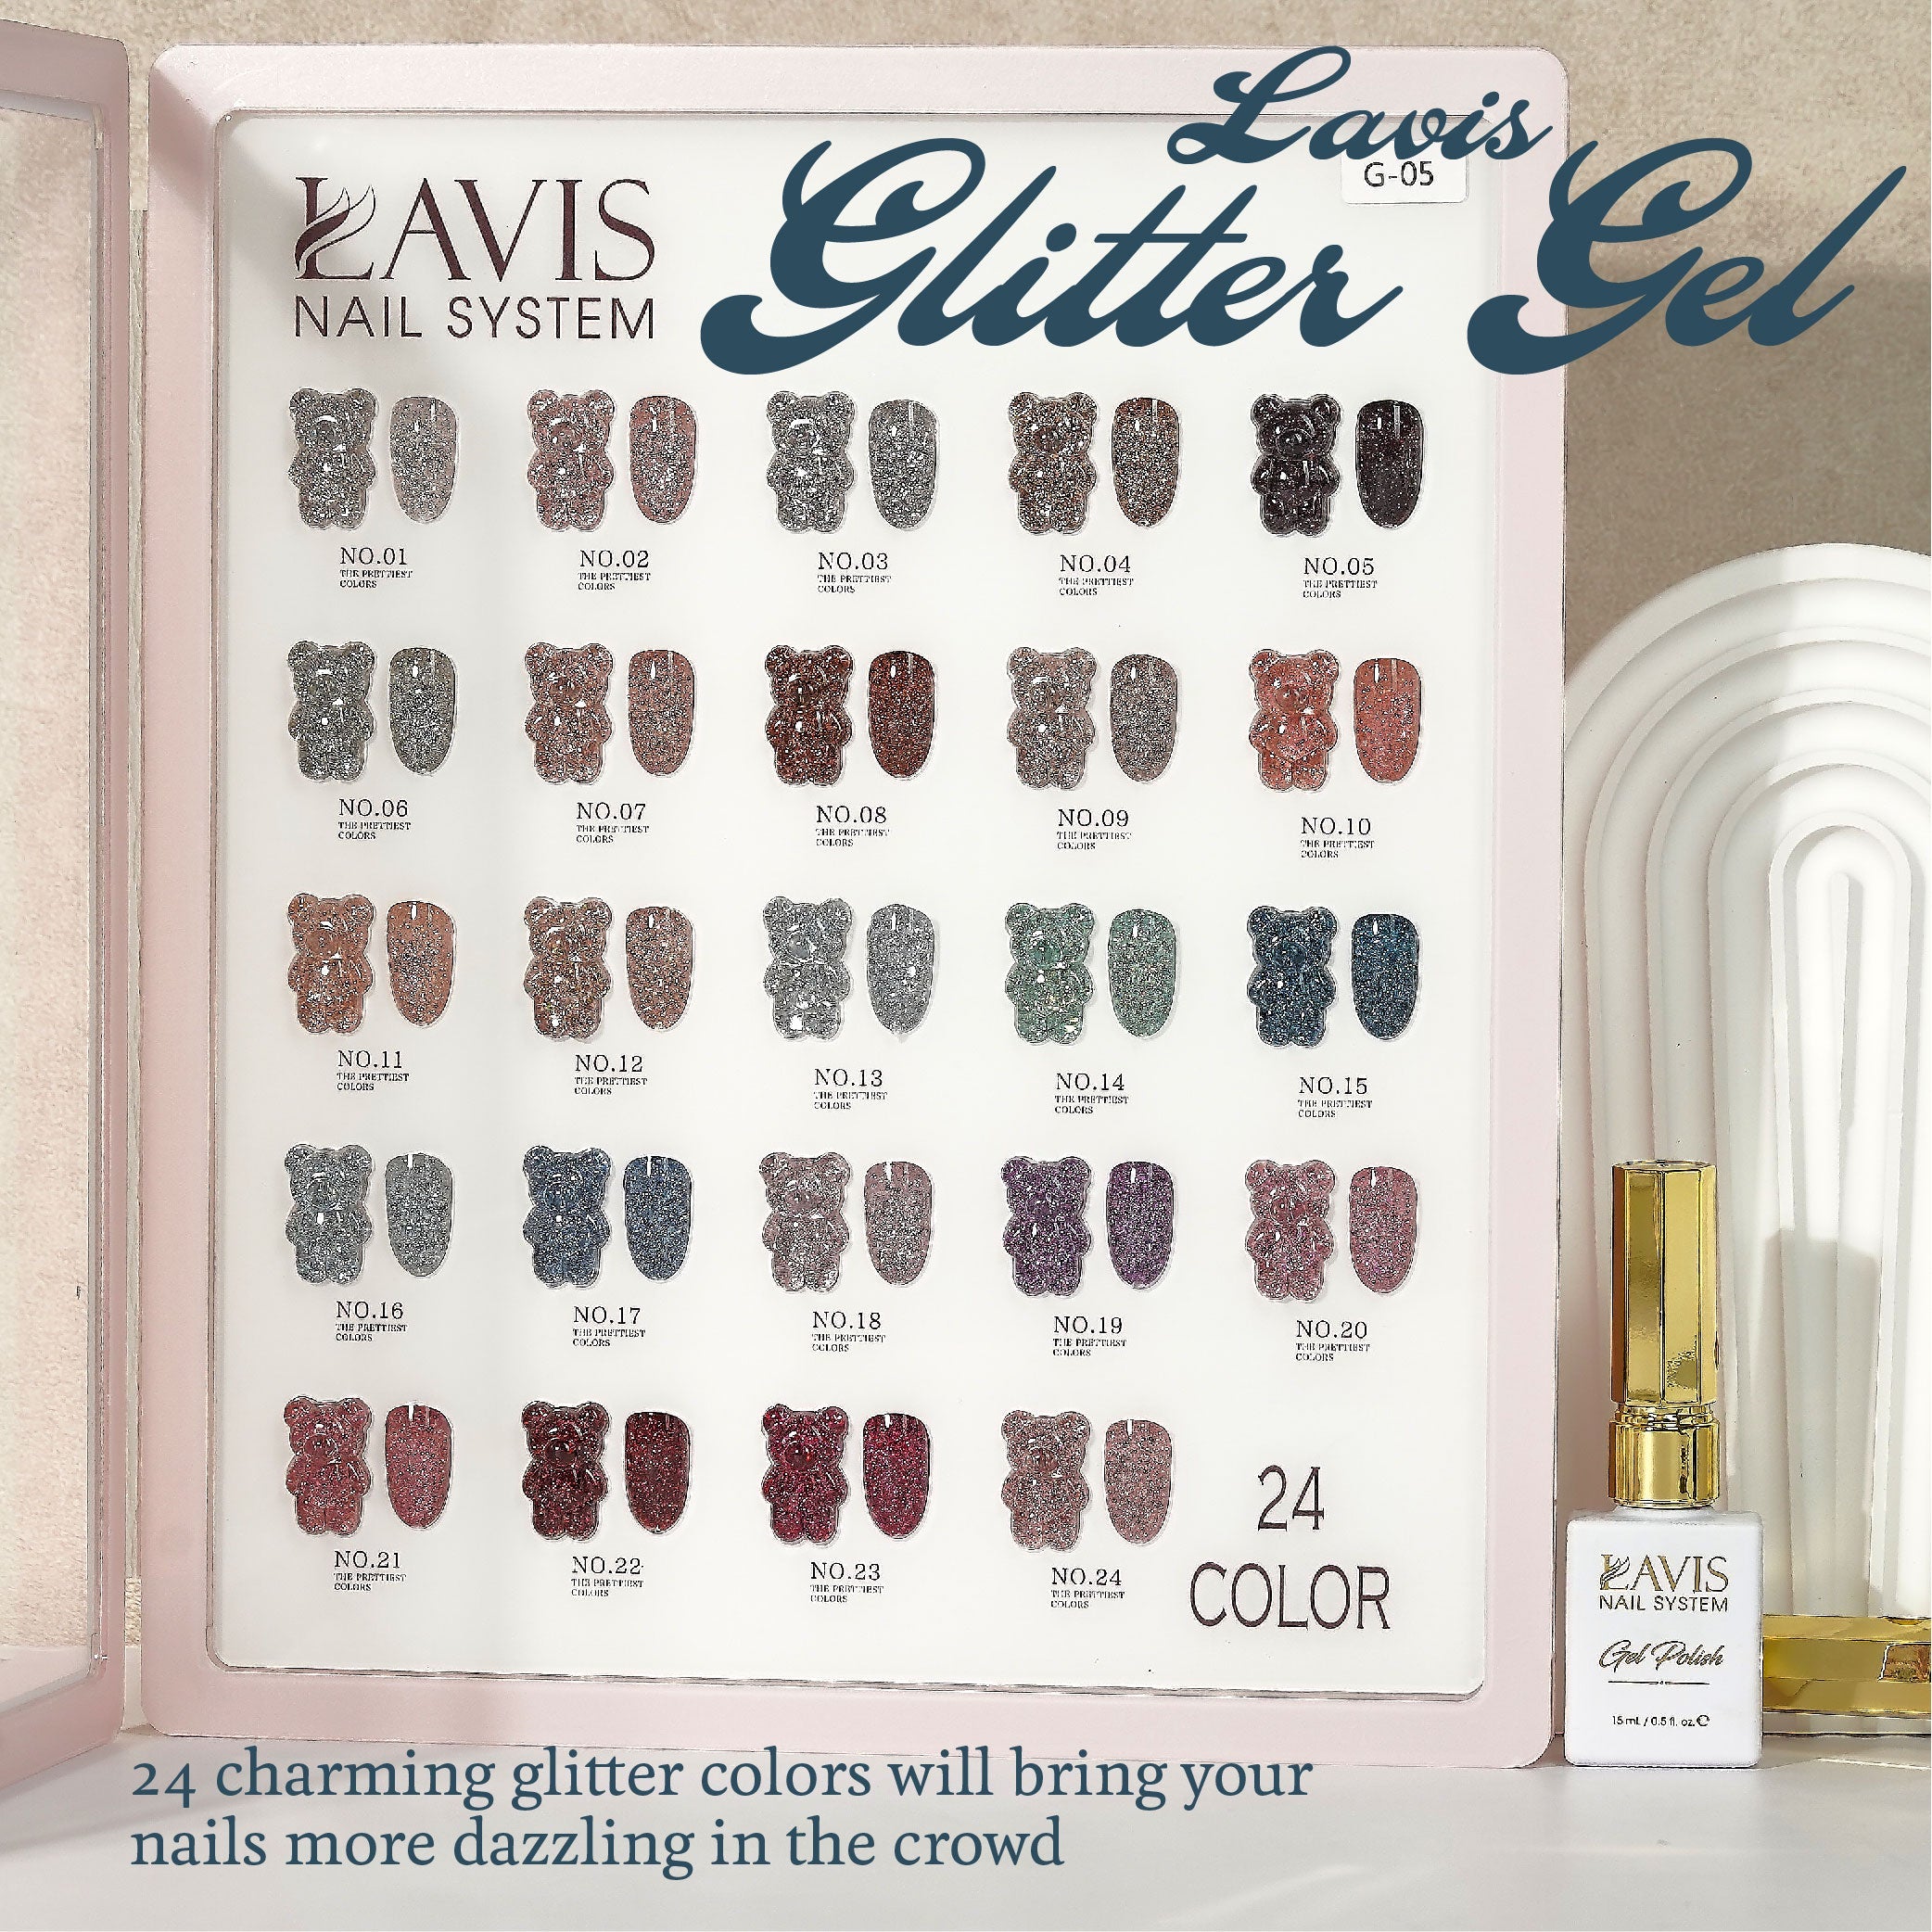 LAVIS Glitter G05 - 02 - Gel Polish 0.5oz - Champagne Toast Glitter Collection